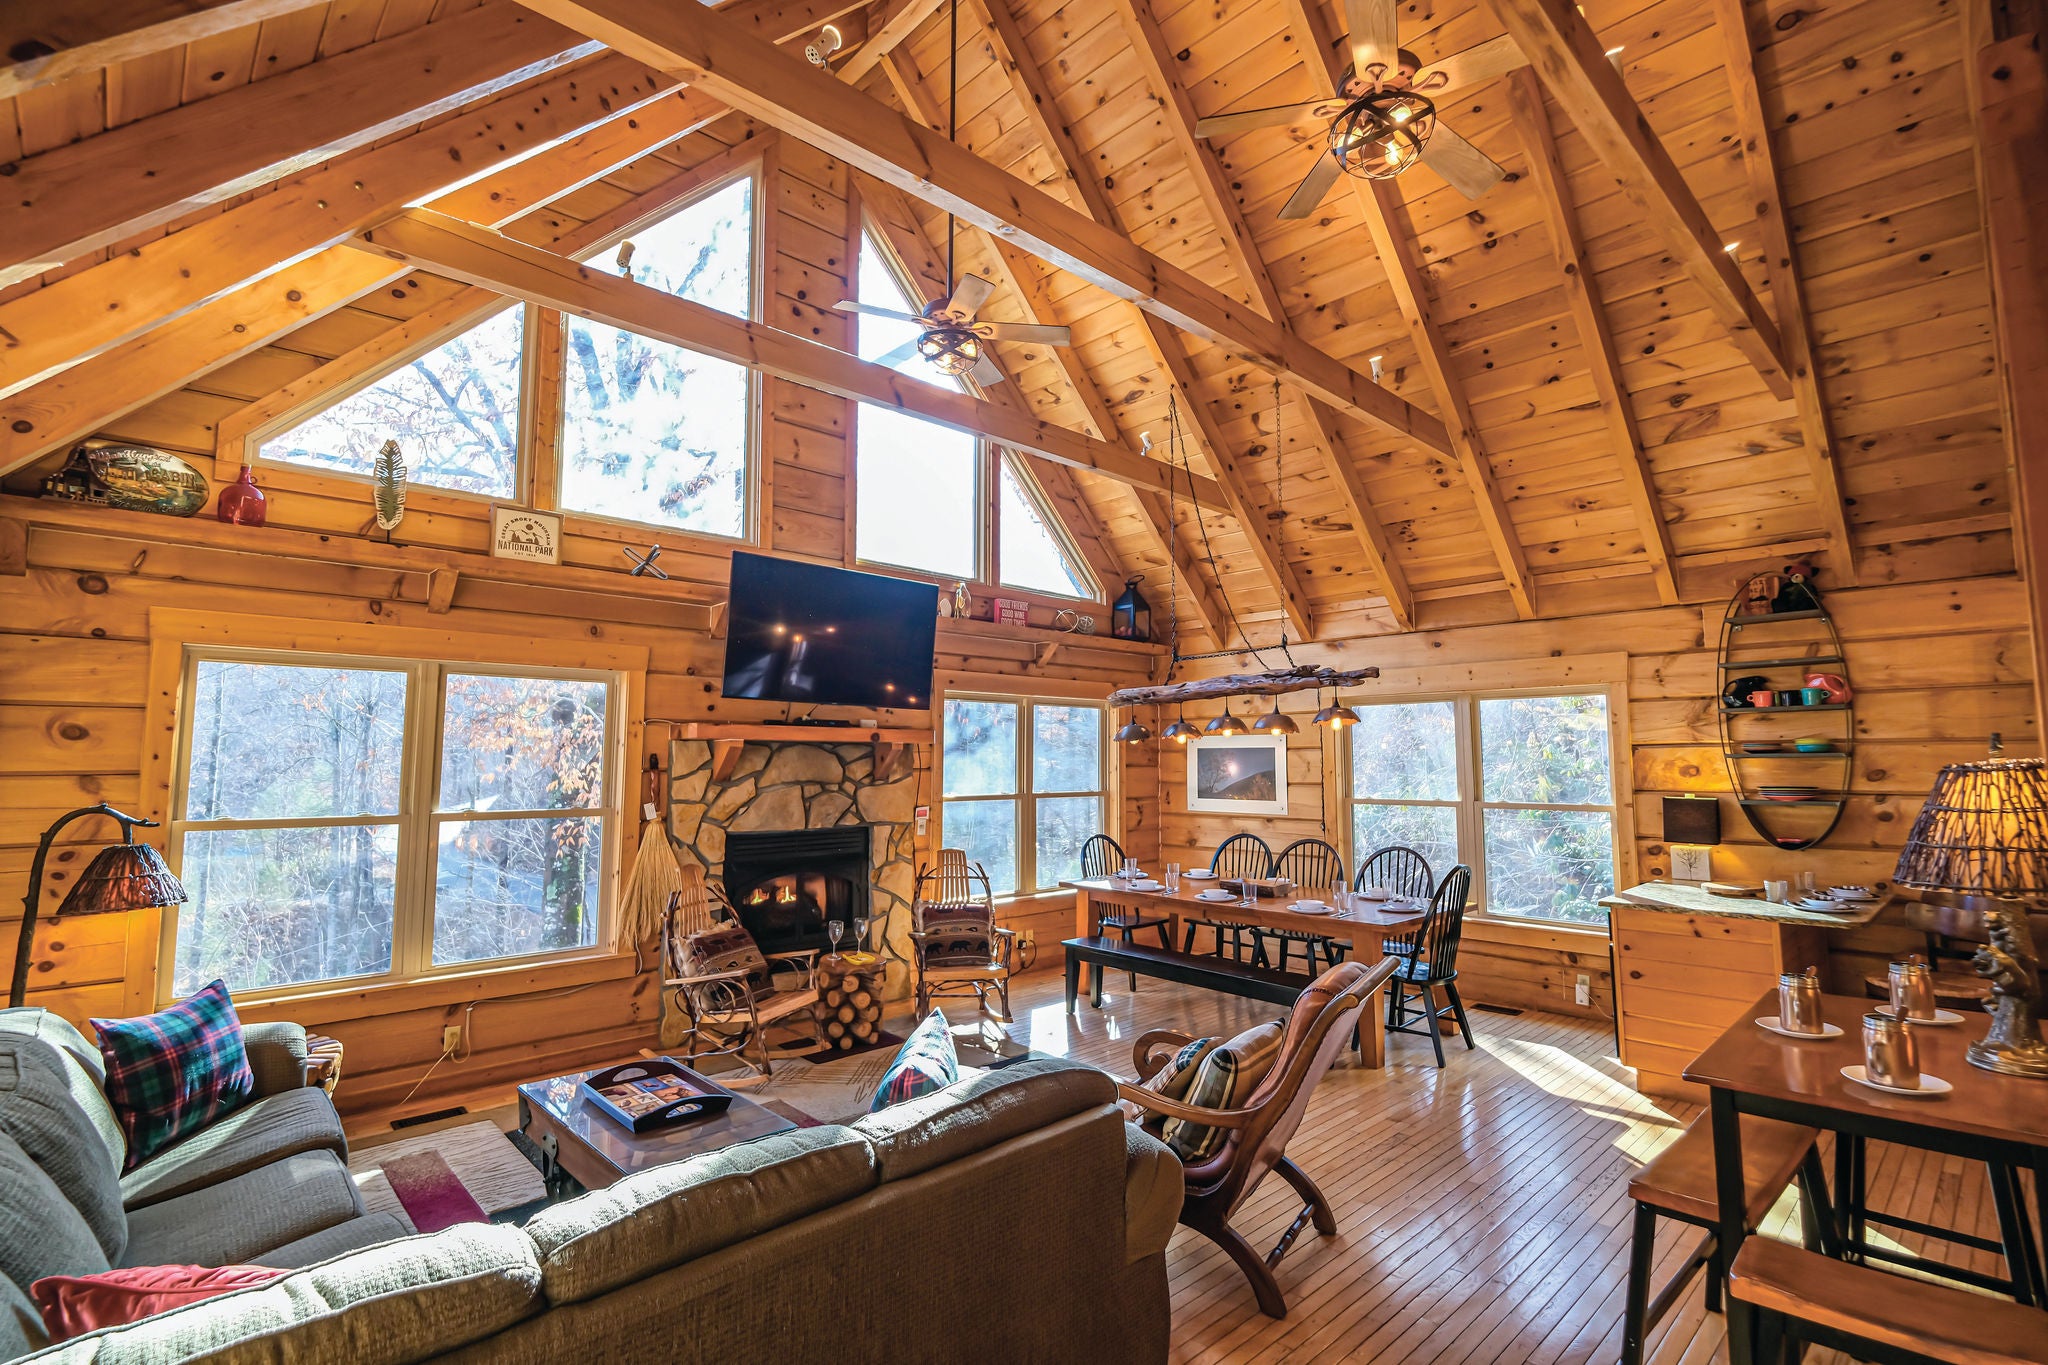 Great Smoky Mountains home interior